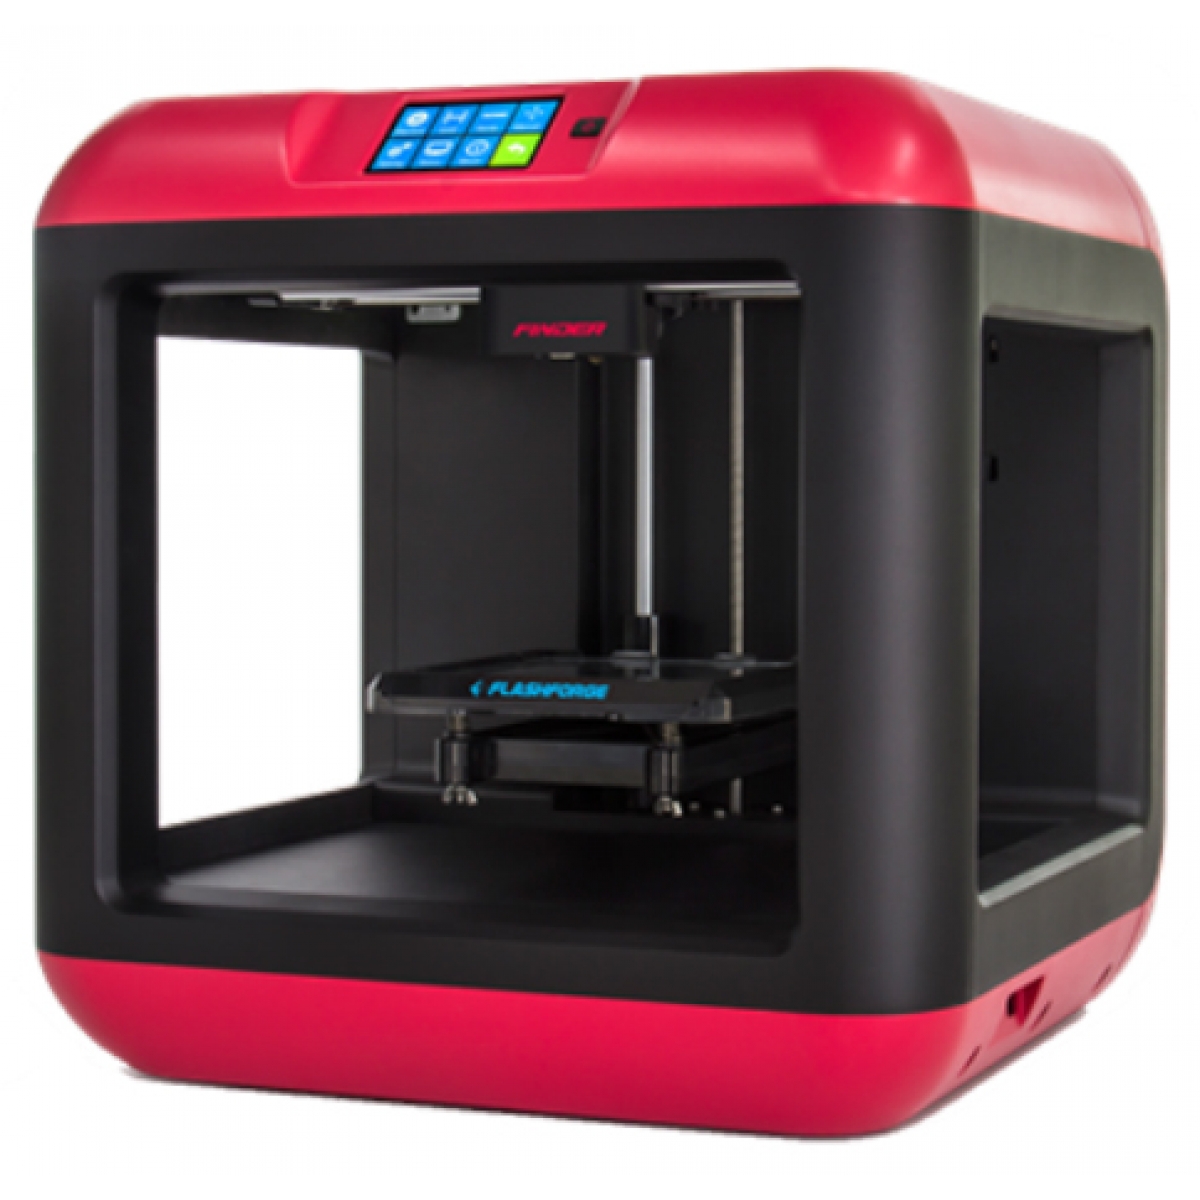 Impressoras 3D Flashforge - 1532526751impressora 3D Flashforge FinDer 54502